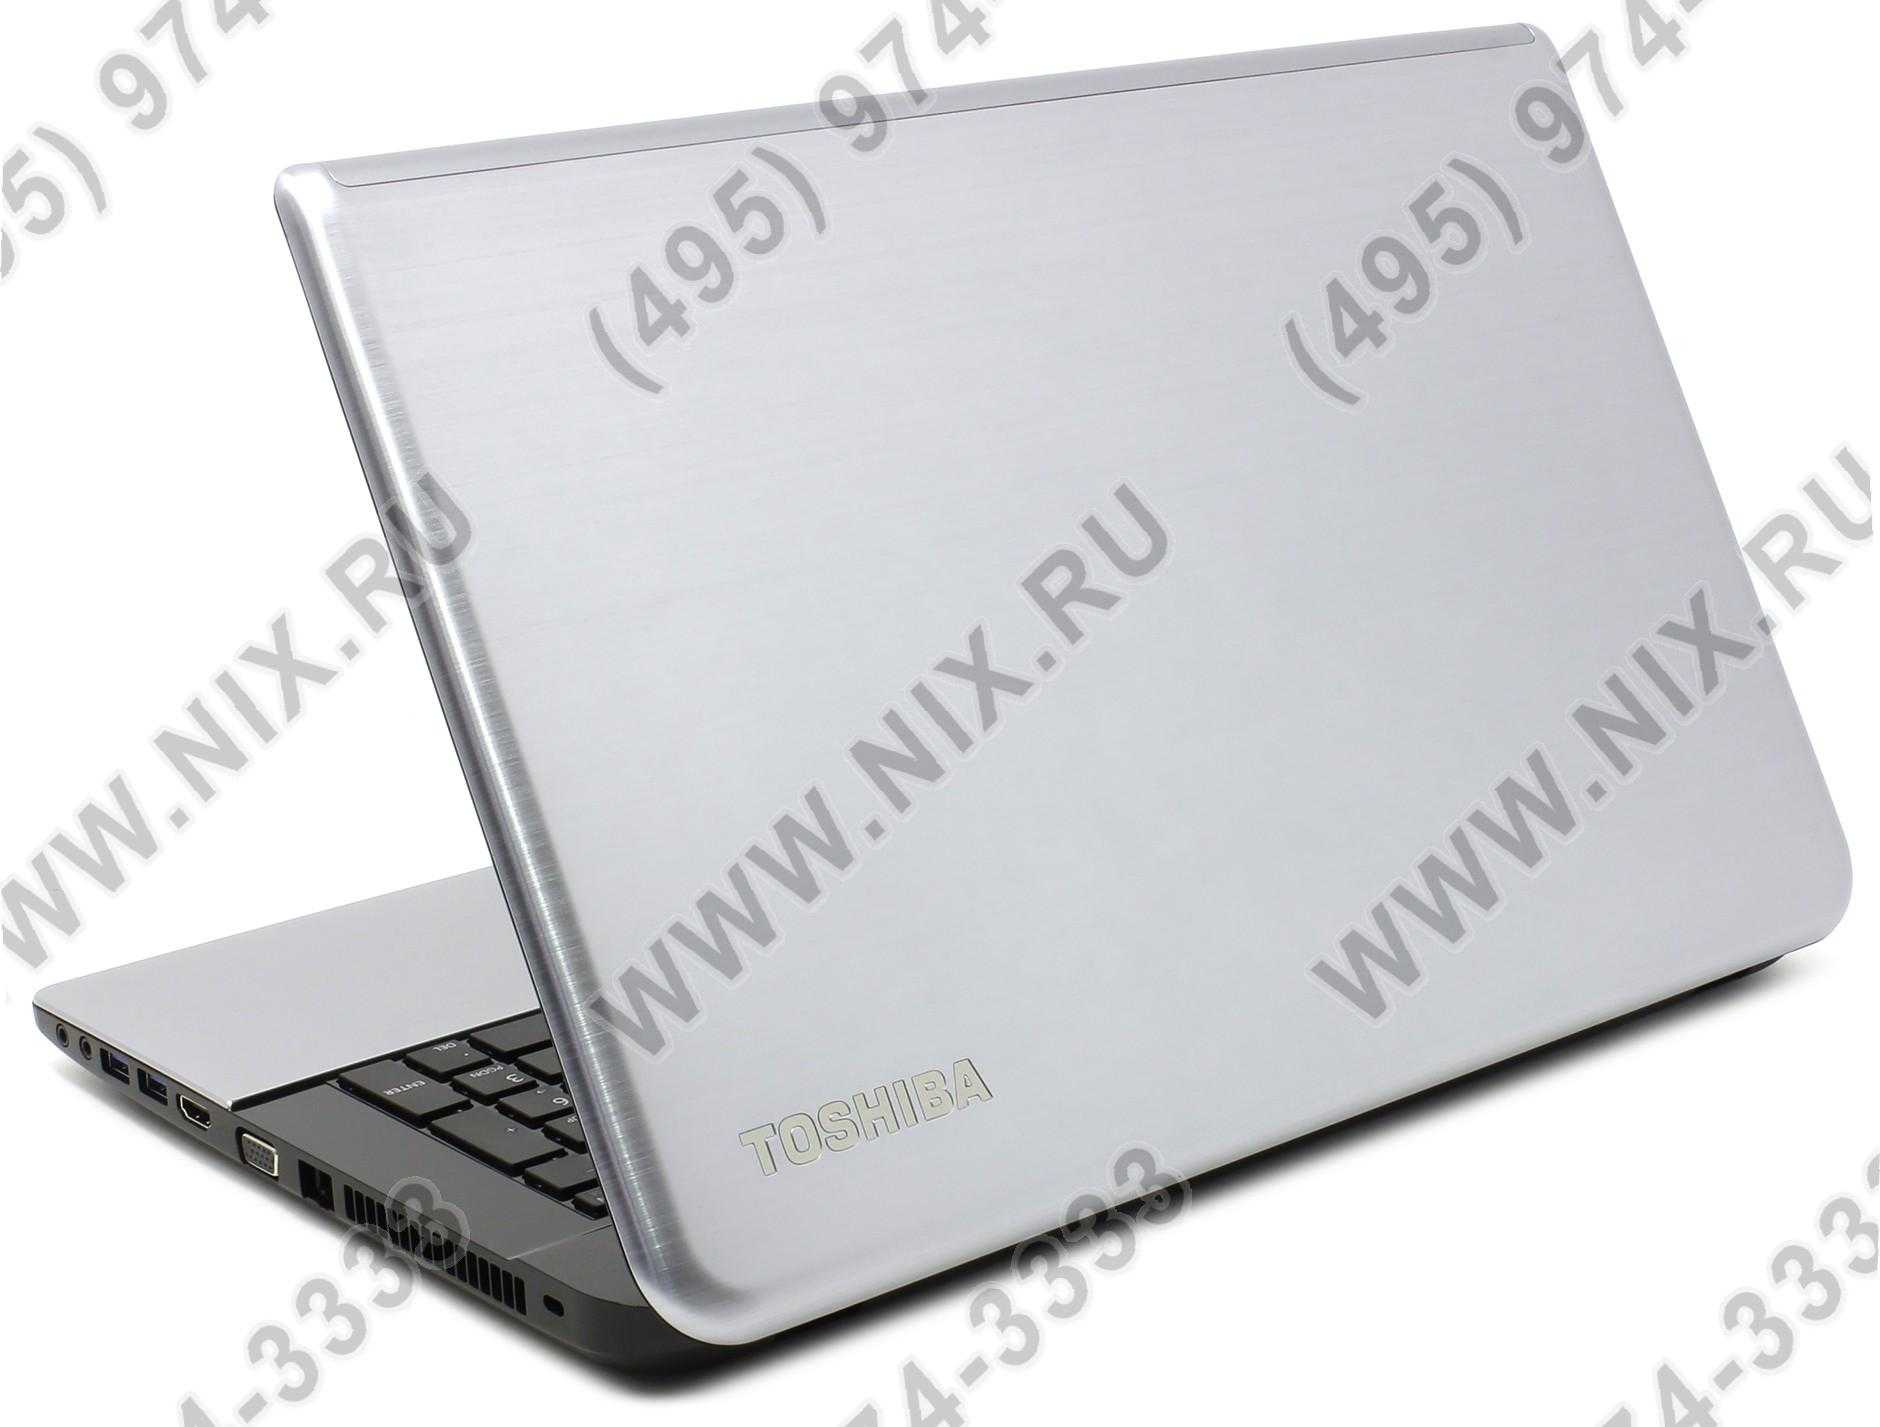 Ноутбук toshiba satellite m70-122 — купить, цена и характеристики, отзывы